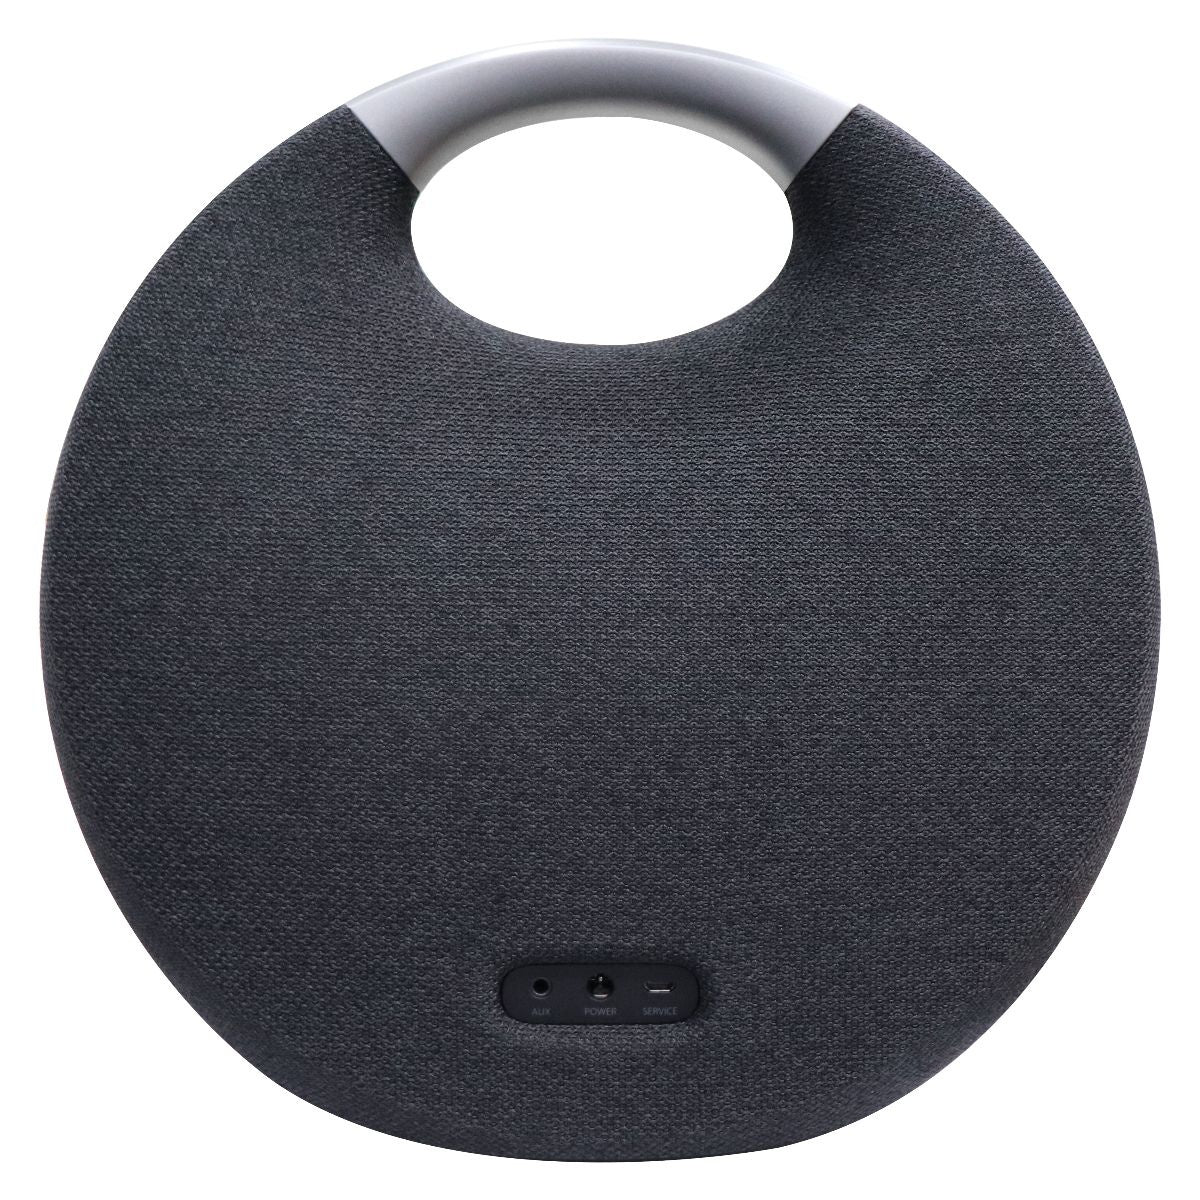 Harman Kardon Onyx Studio 5 Bluetooth Wireless Speaker - Black (HKOS5BLKSP) Home Multimedia - Home Speakers & Subwoofers Harman Kardon    - Simple Cell Bulk Wholesale Pricing - USA Seller